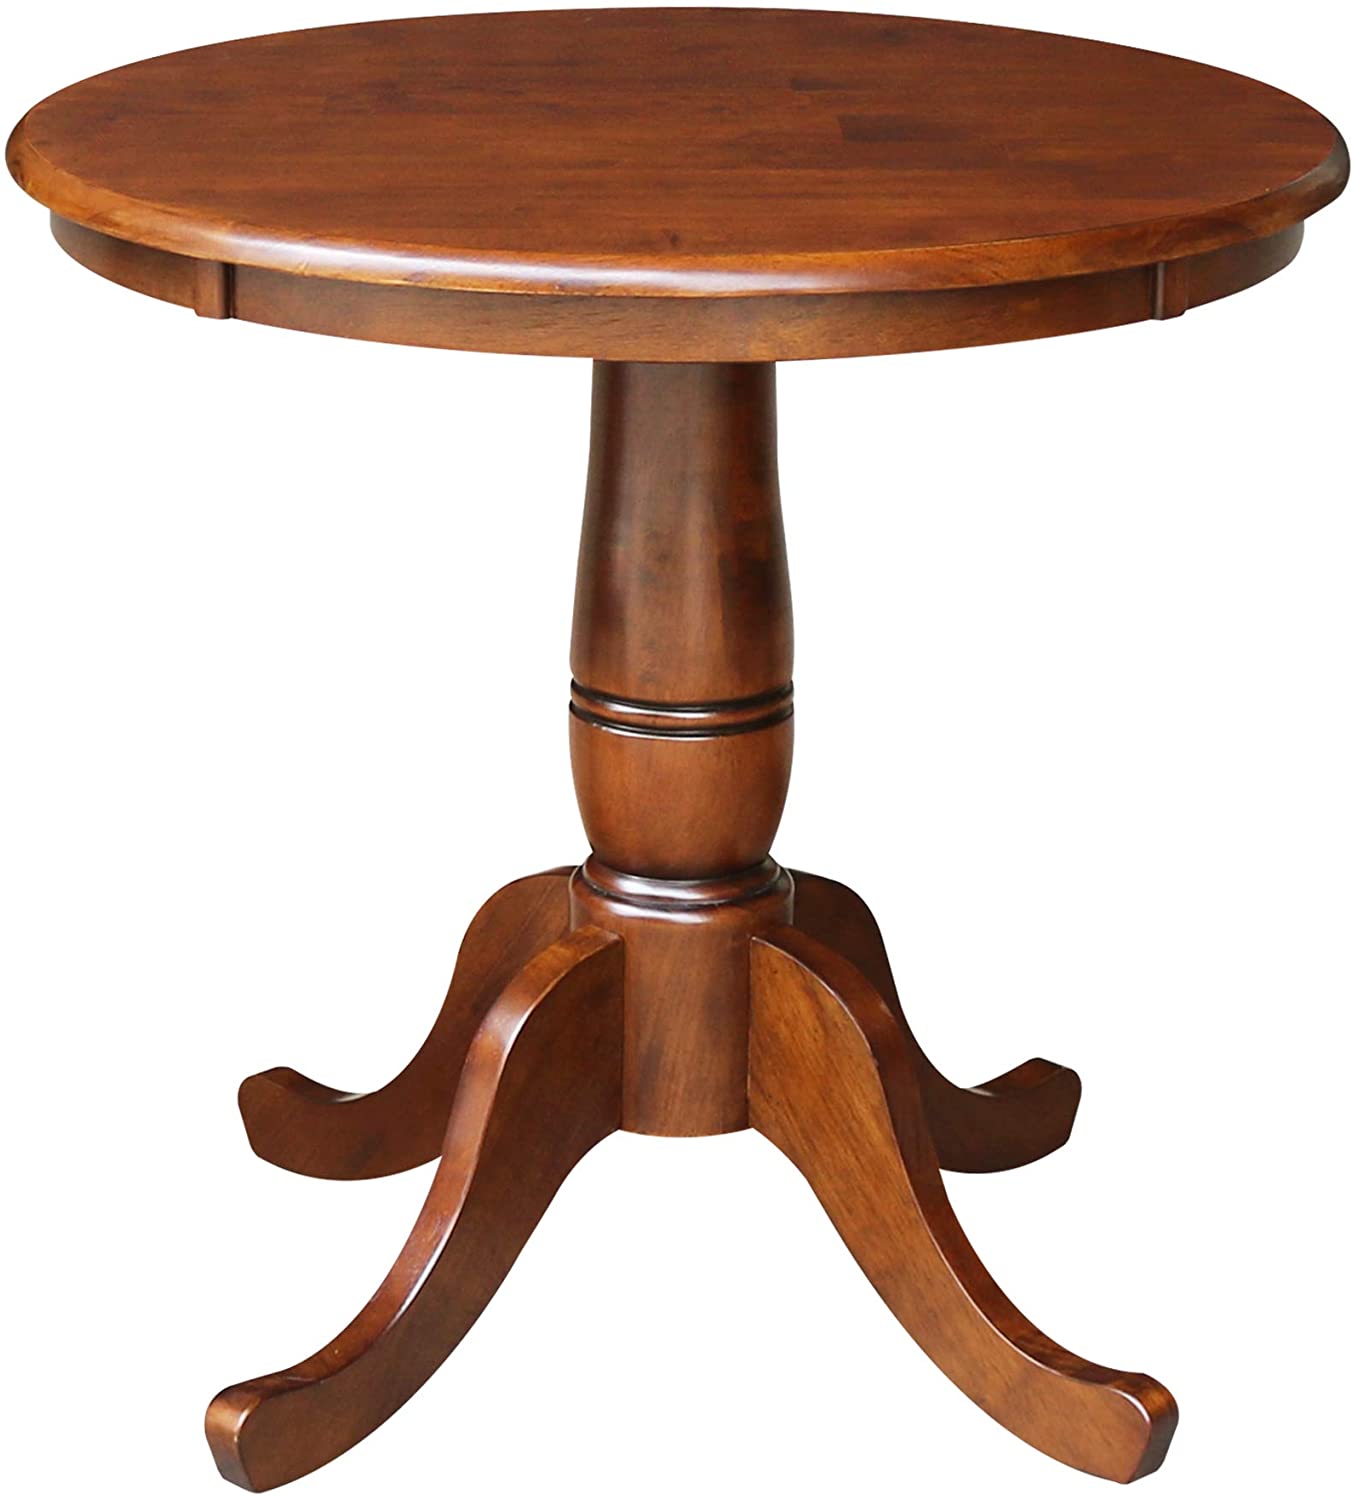 B00LPYP4B0 International Concepts 30-Inch Round Pedestal Dining Table, Espresso